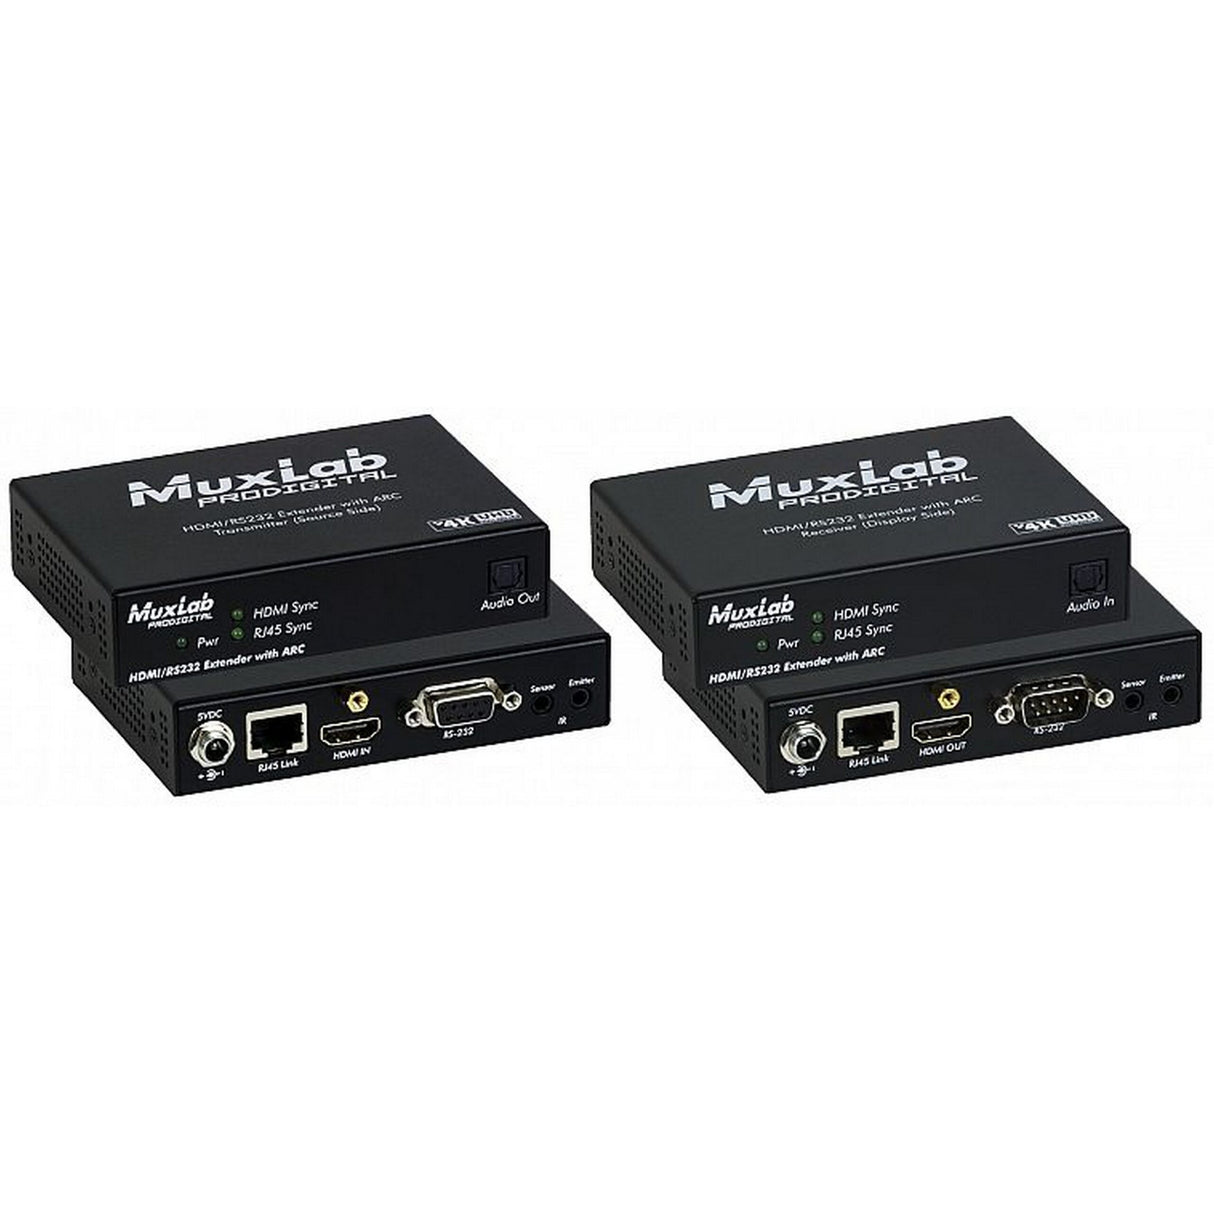 MuxLab 500458-ARC HDMI/RS232 Extender Kit with ARC, HDBT, UHD-4K